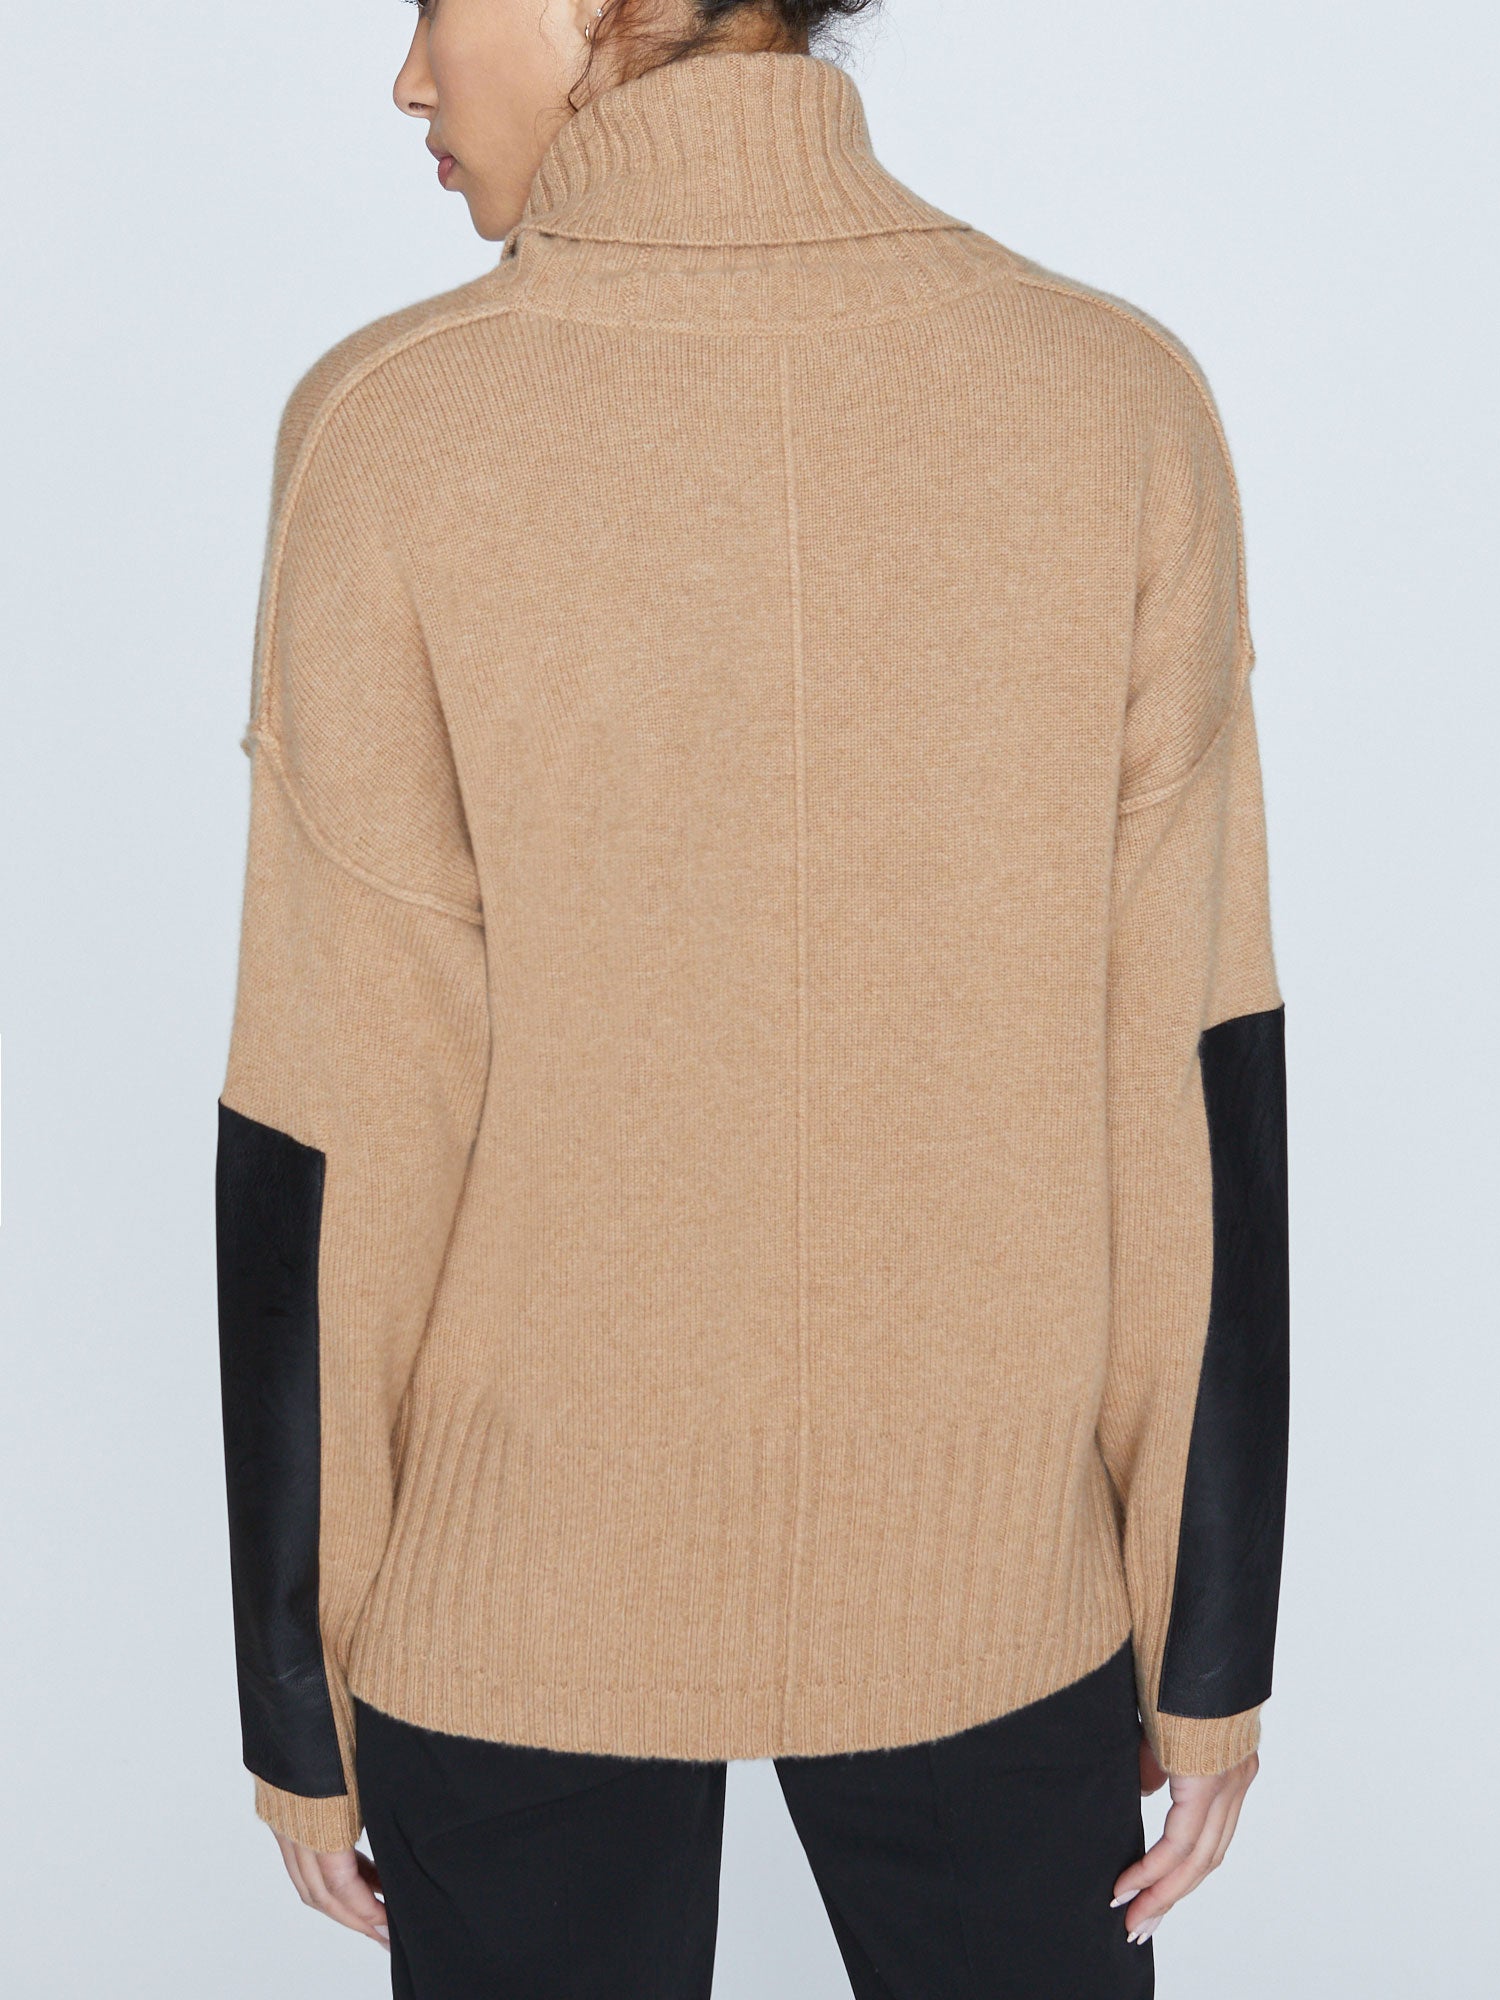 Yumi cashmere turtleneck tan sweater back view